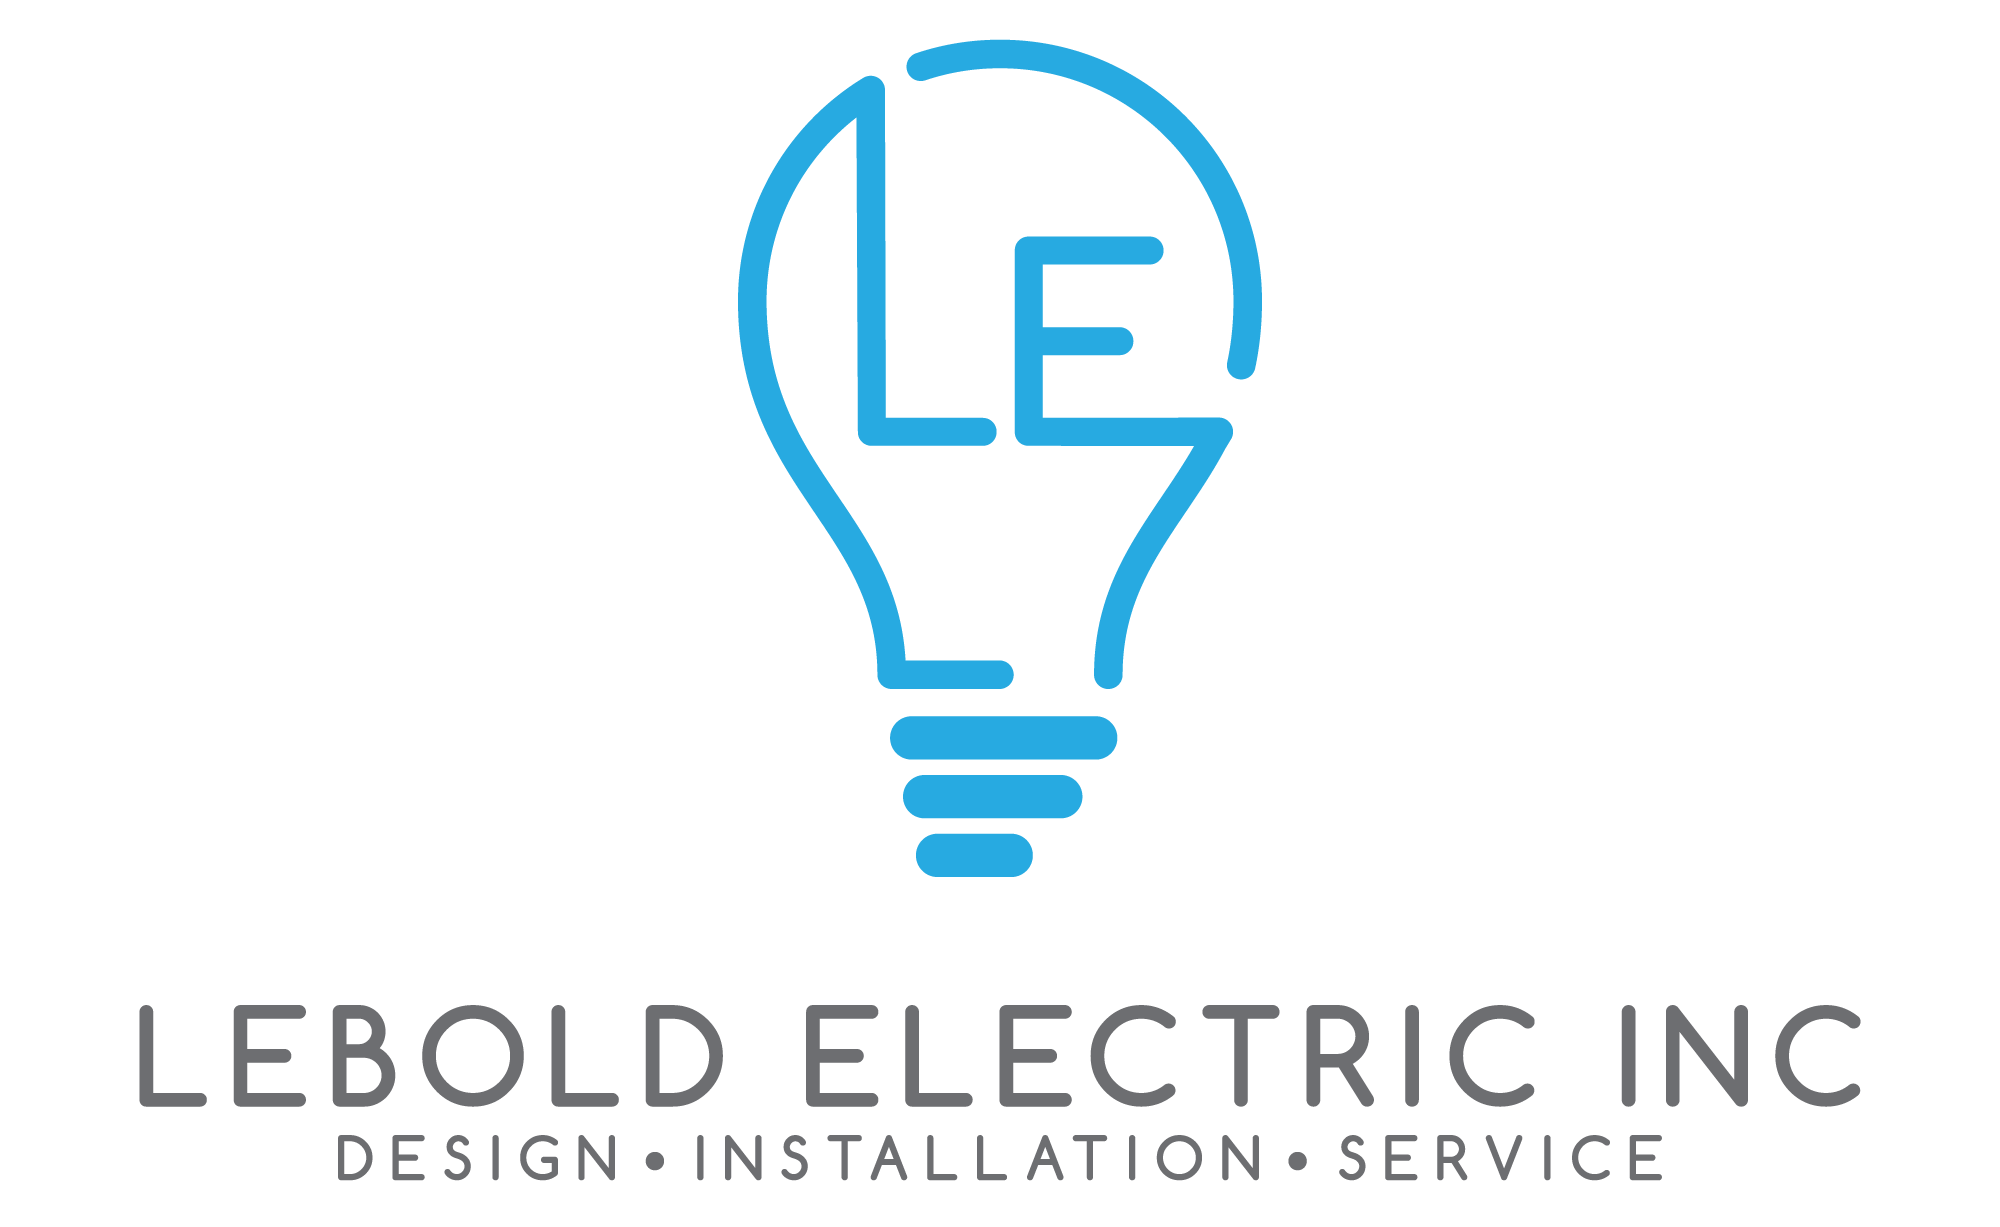 Lebold Electric Inc logo 1